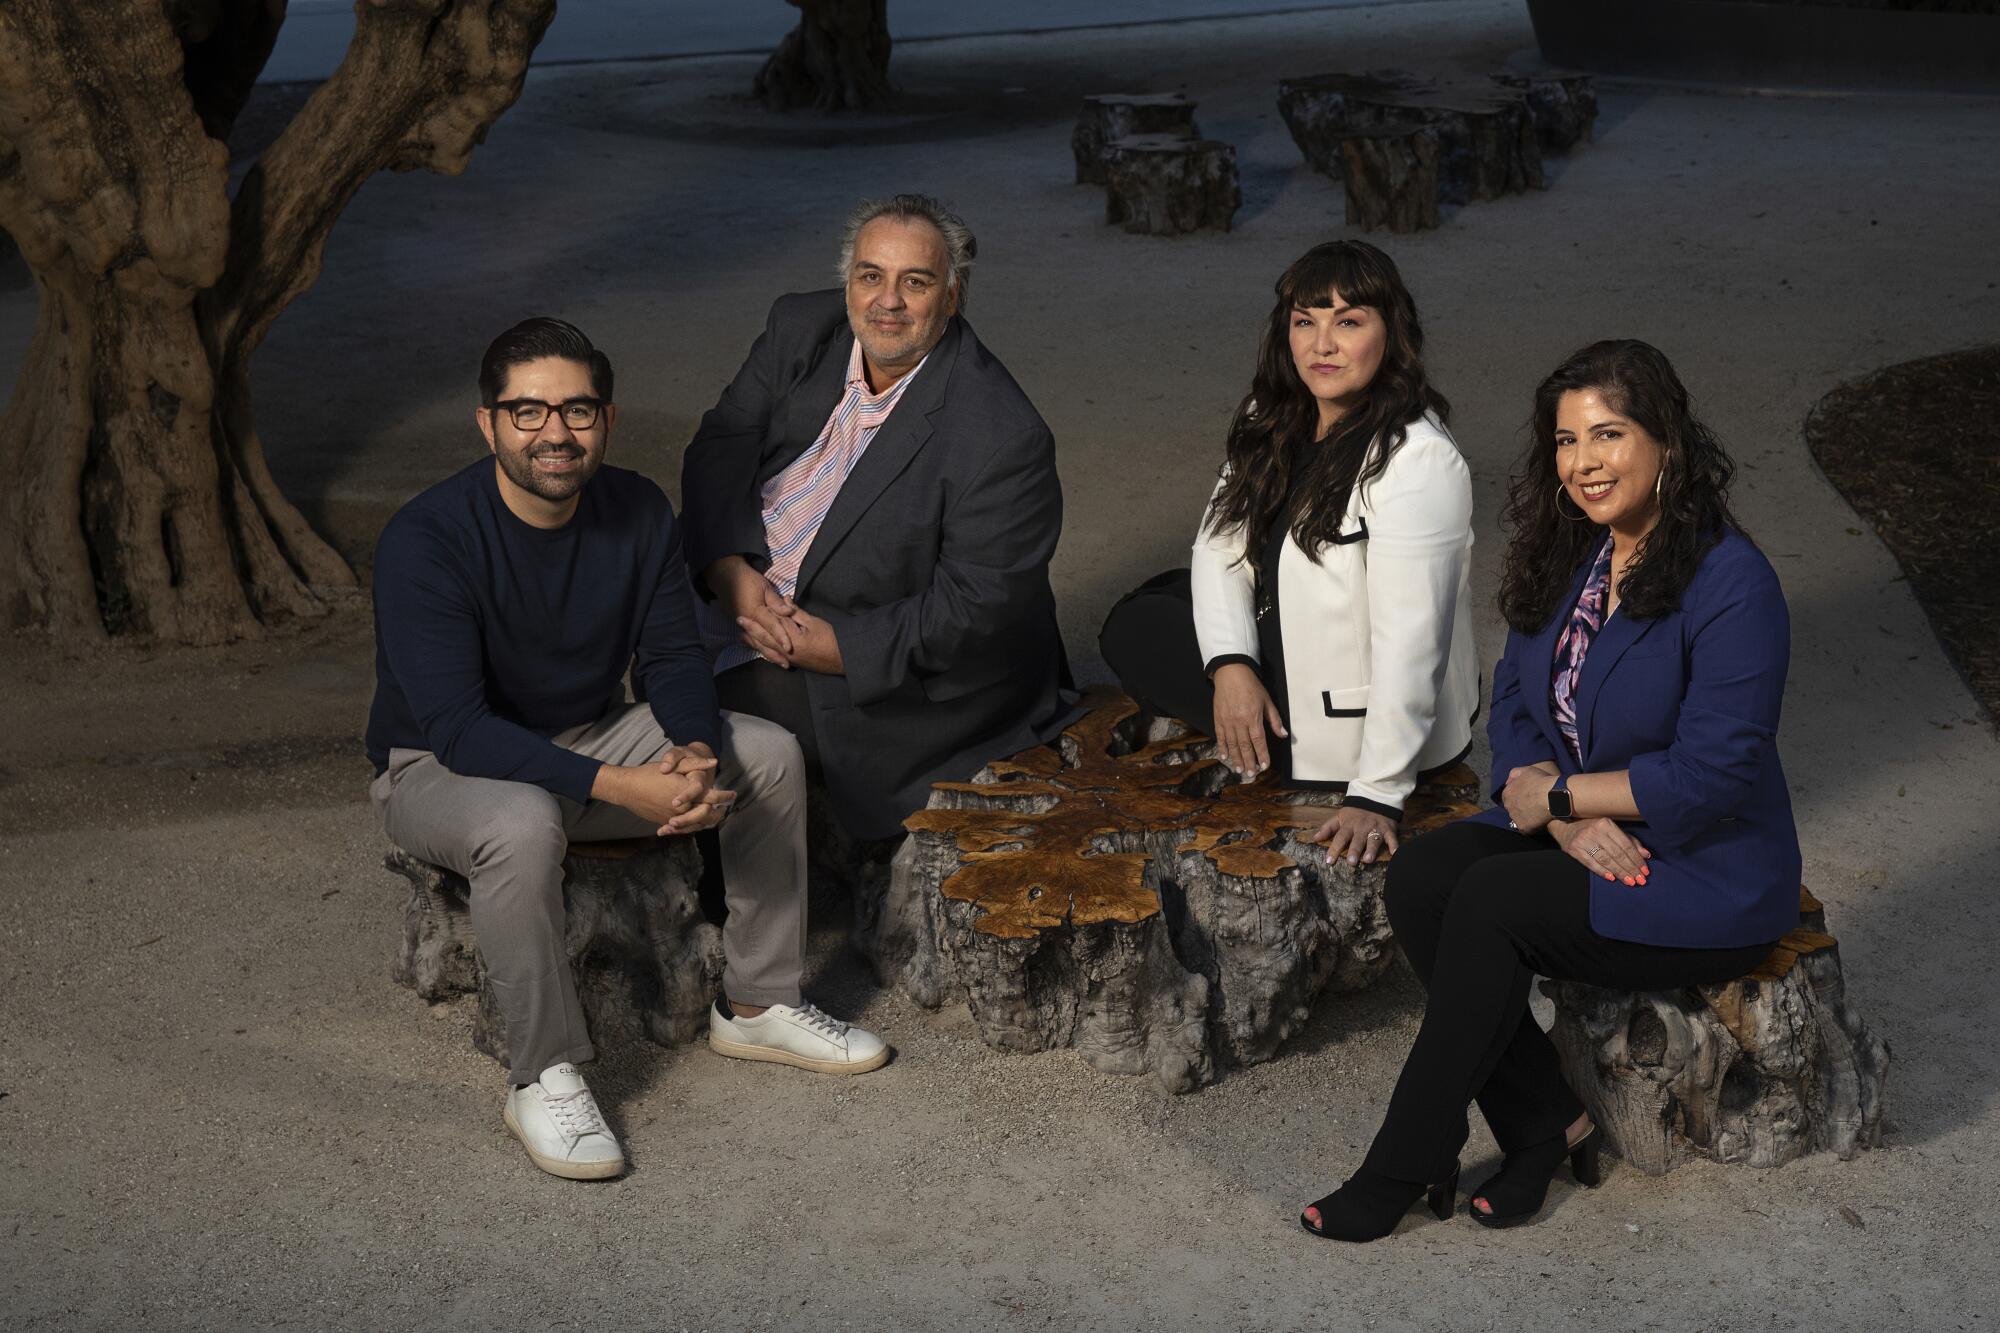 Jairo Alvarado, Luis Alfaro, Pilar Tompkins-Rivas and Ana-Christina Ramon sit amid an olive grove in downtown L.A.